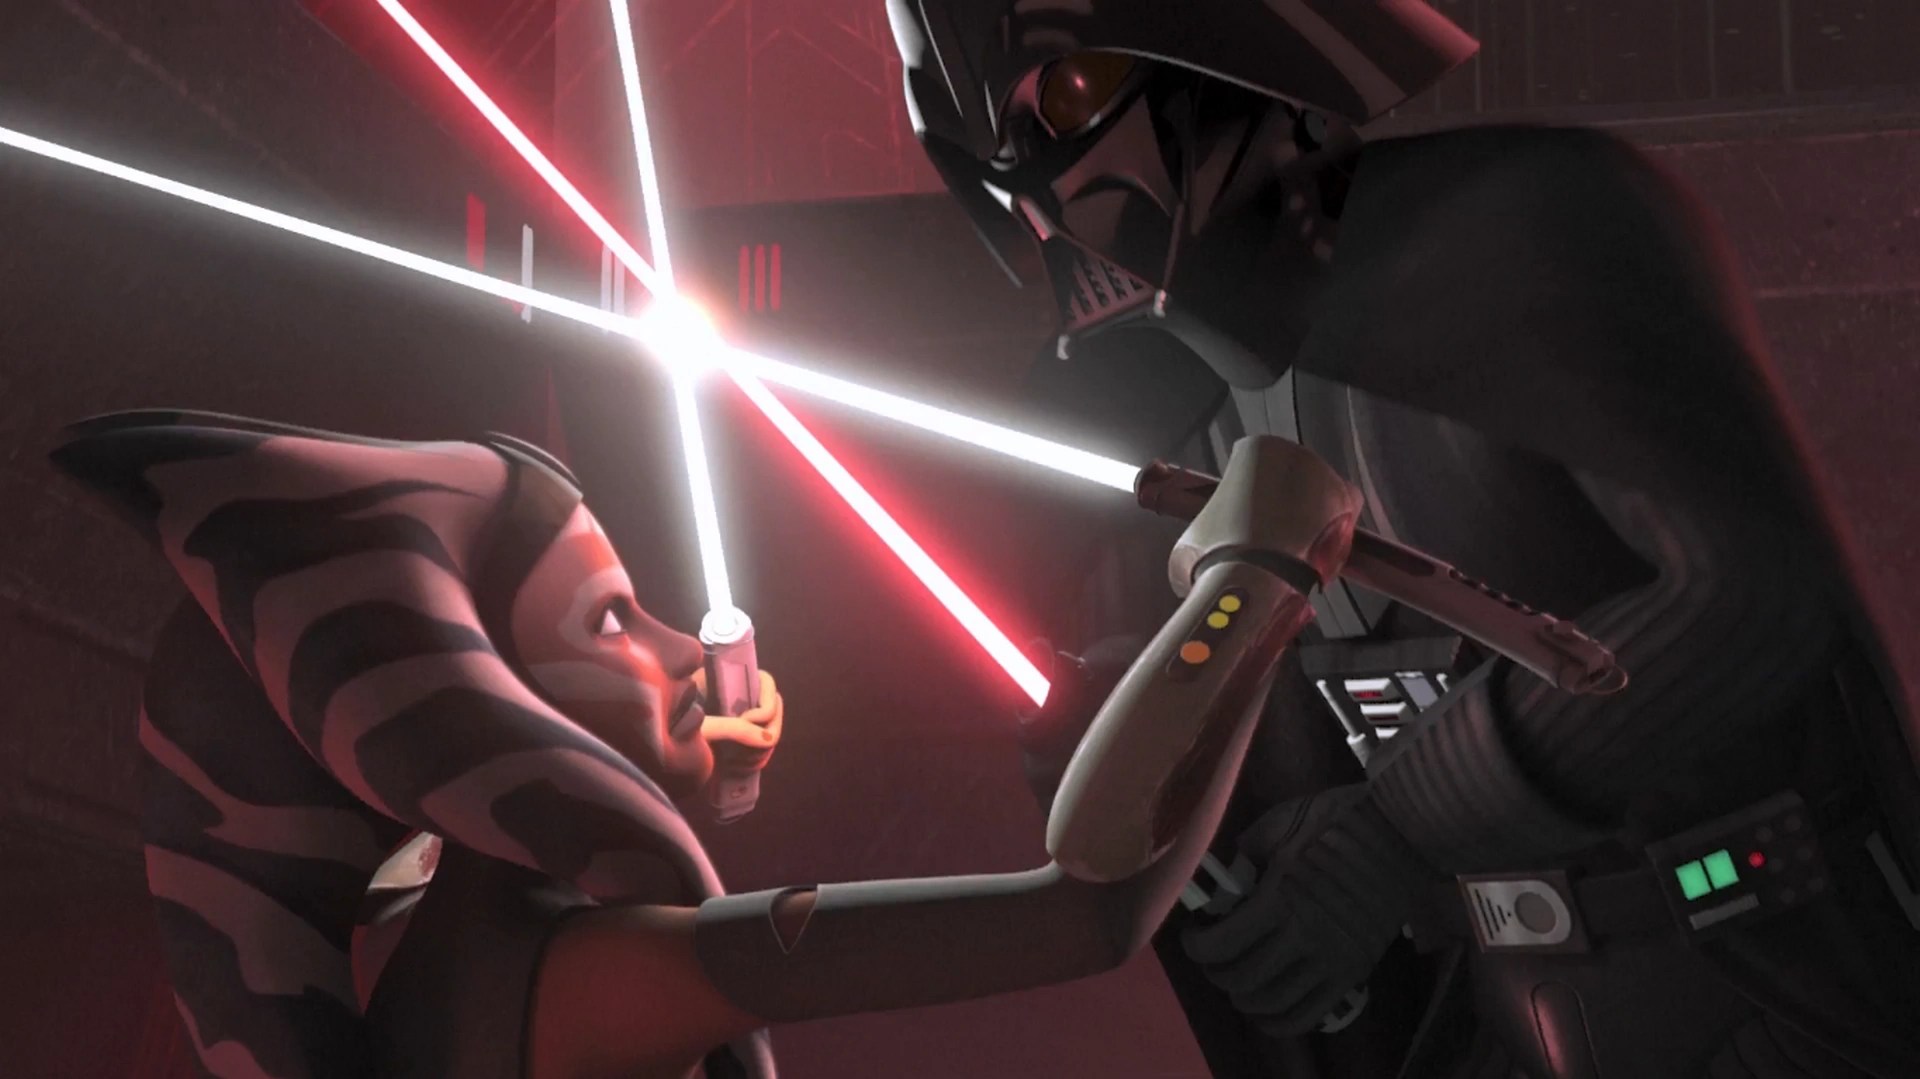 Ahsoka Tano enfrenta Darth Vader em “Star Wars: Rebels”.